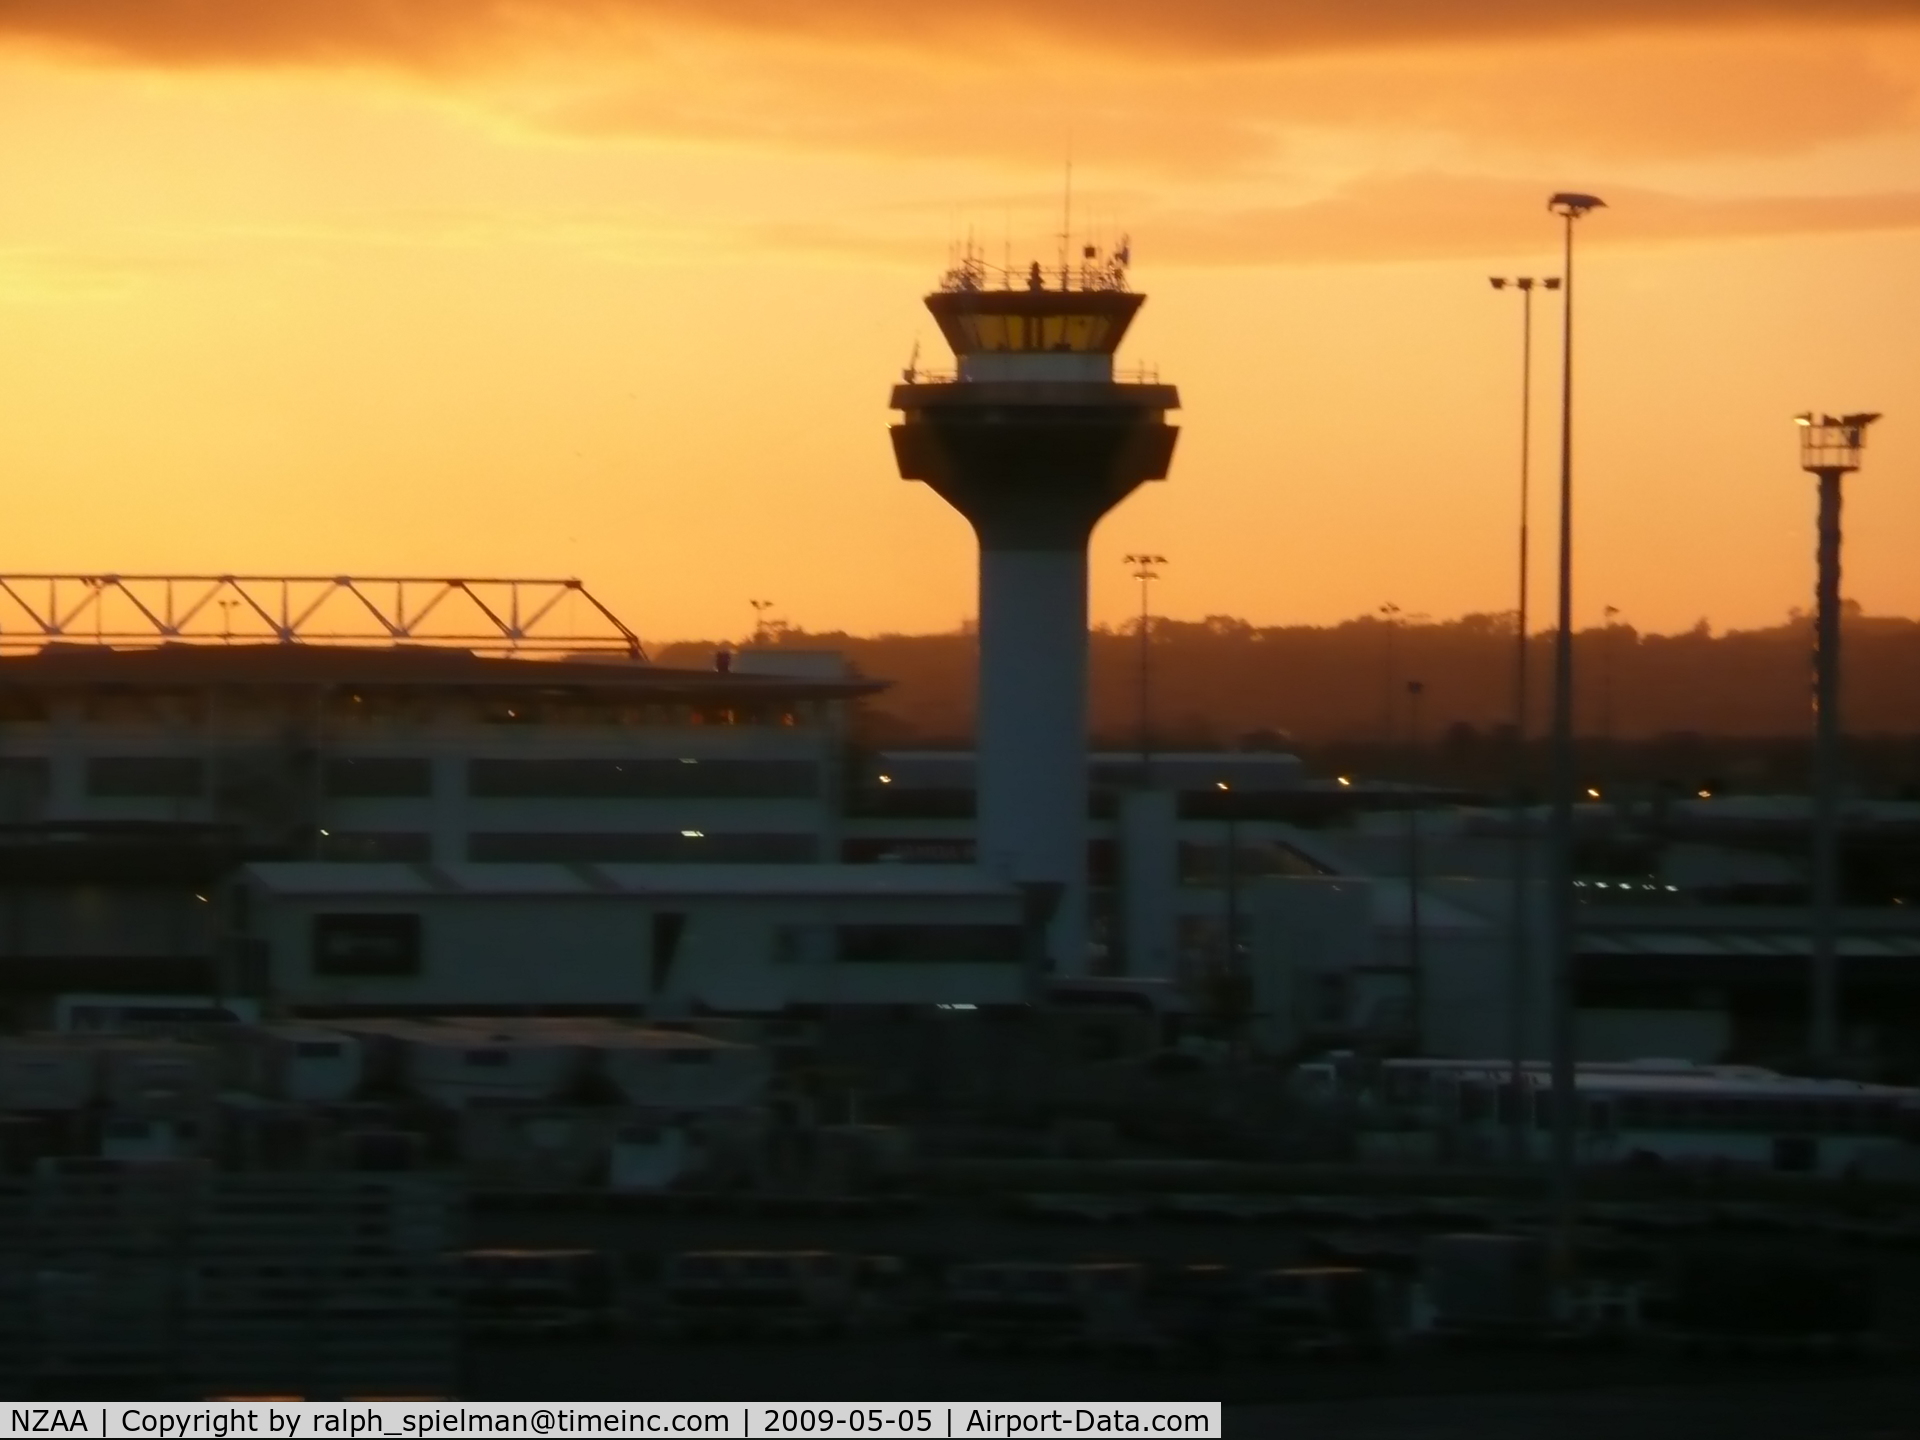 Auckland International Airport, Auckland New Zealand (NZAA) - Sunrise